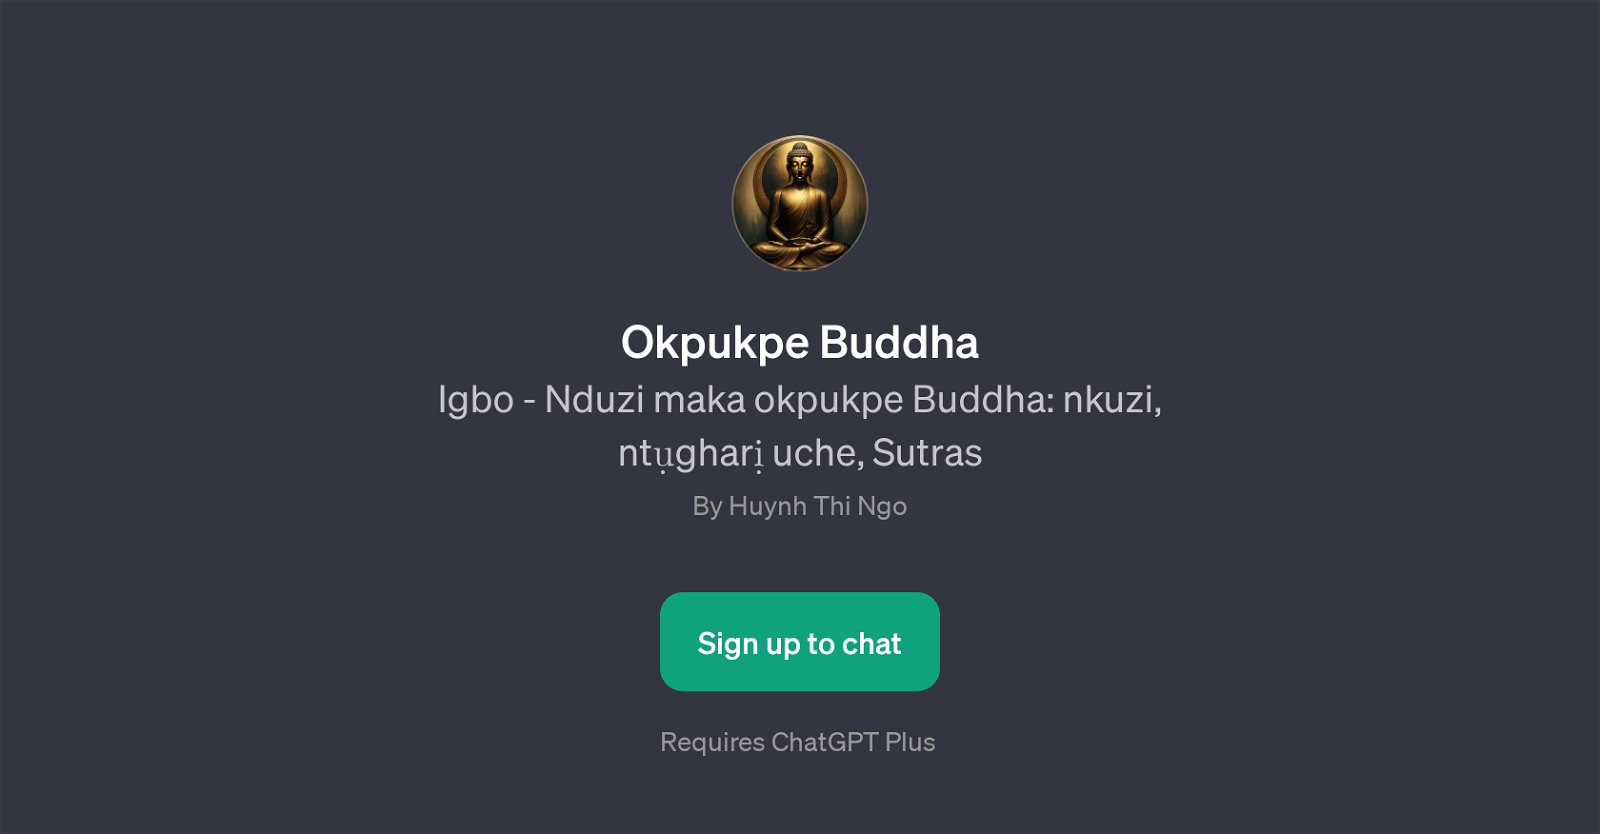 Okpukpe Buddha website